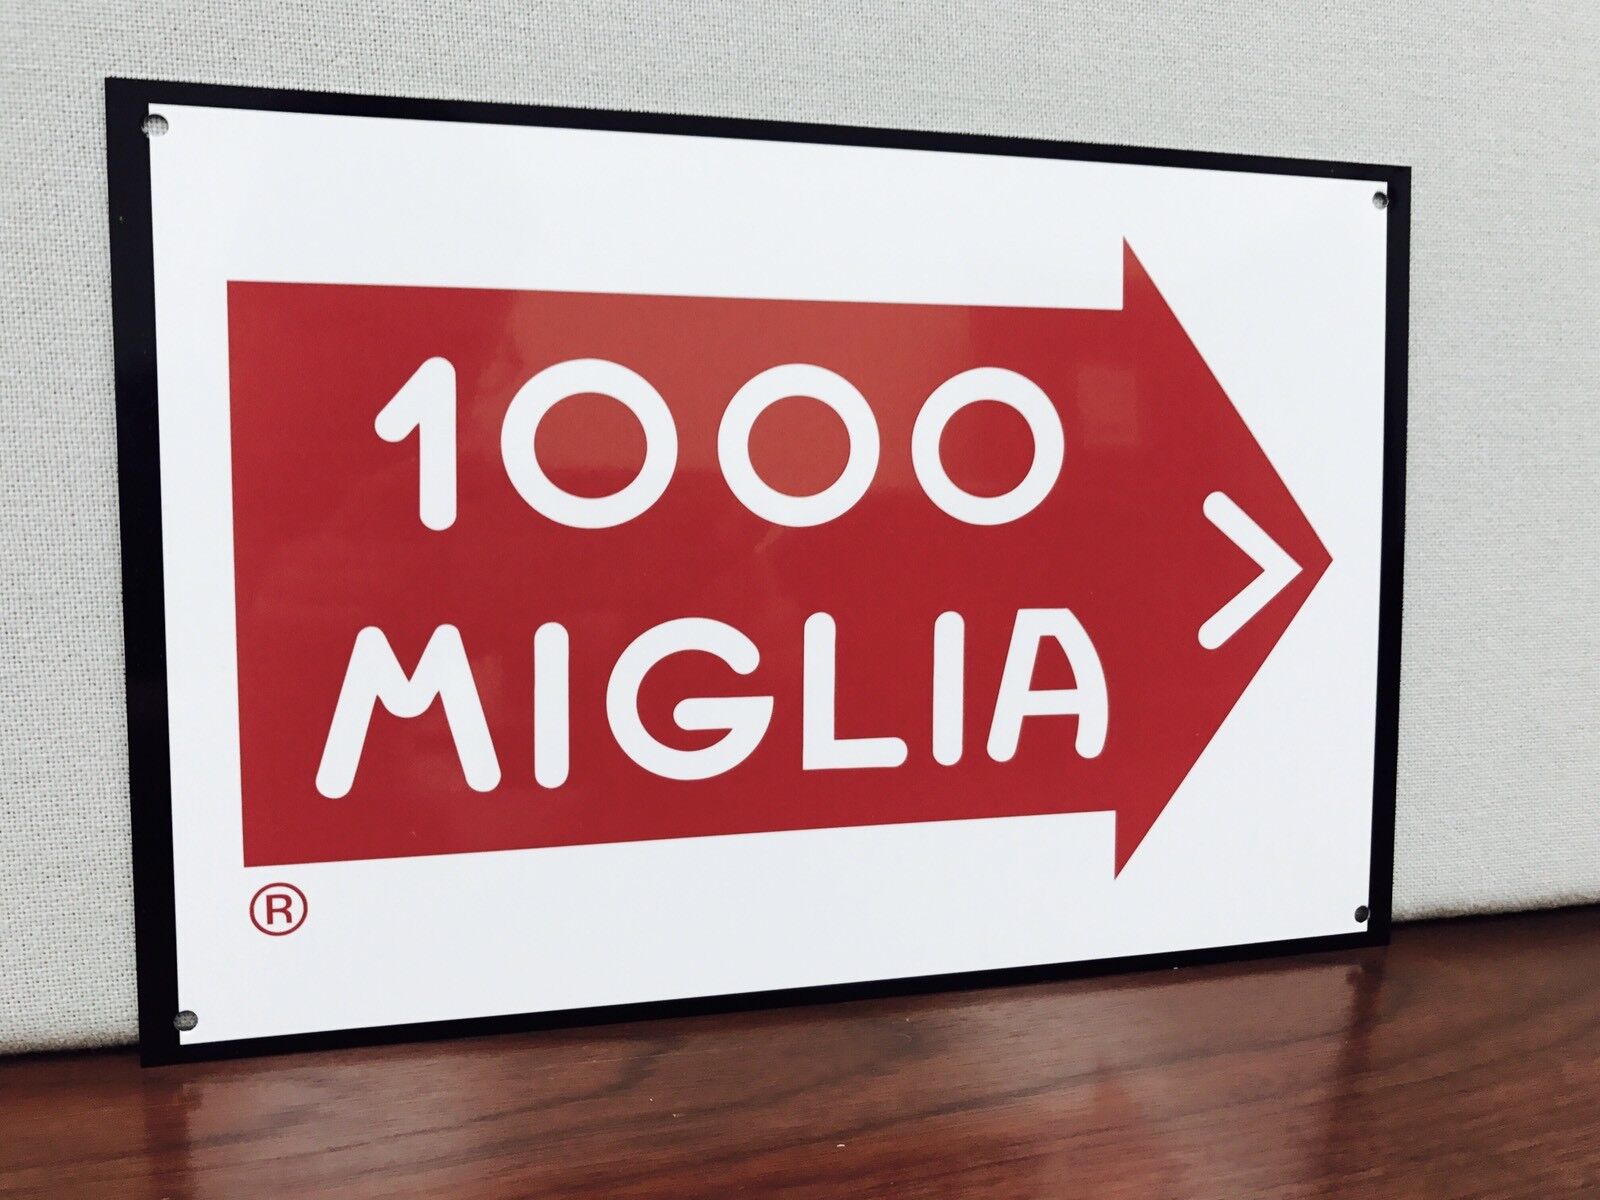 Mille Miglia 1000  Alfa Romeo Ferrari vintage metal sign Reproduction